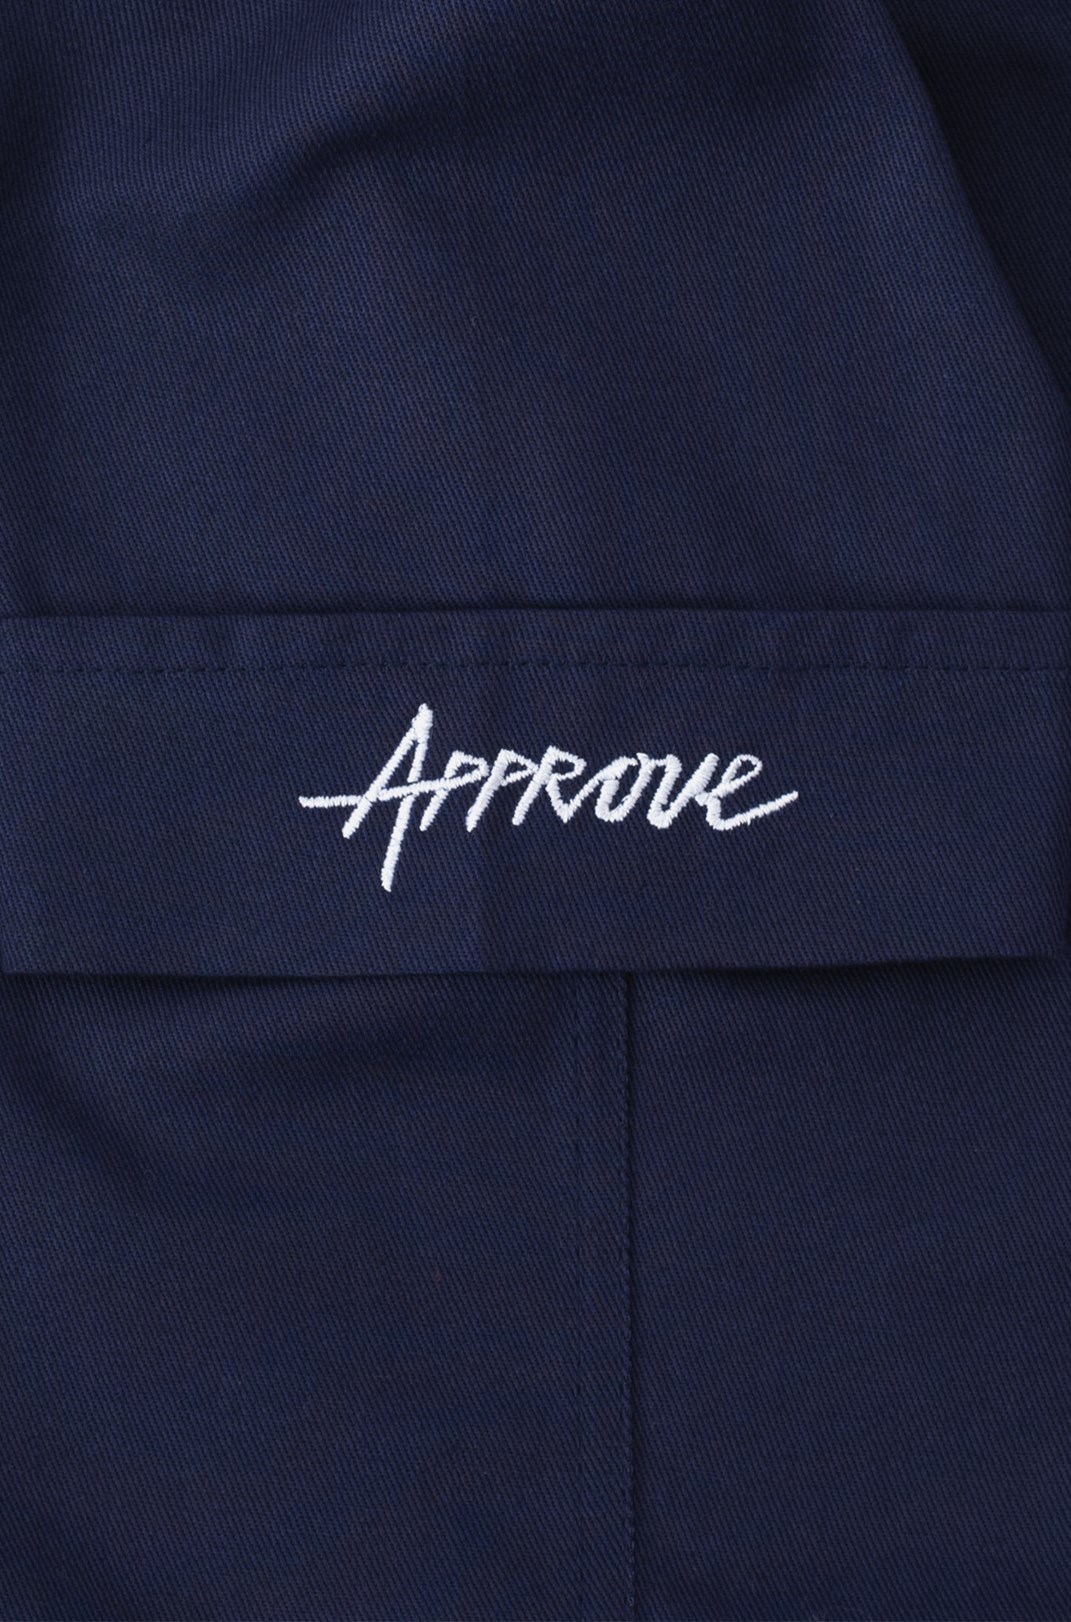 Camisa Sarja Approve Workwear Azul Marinho